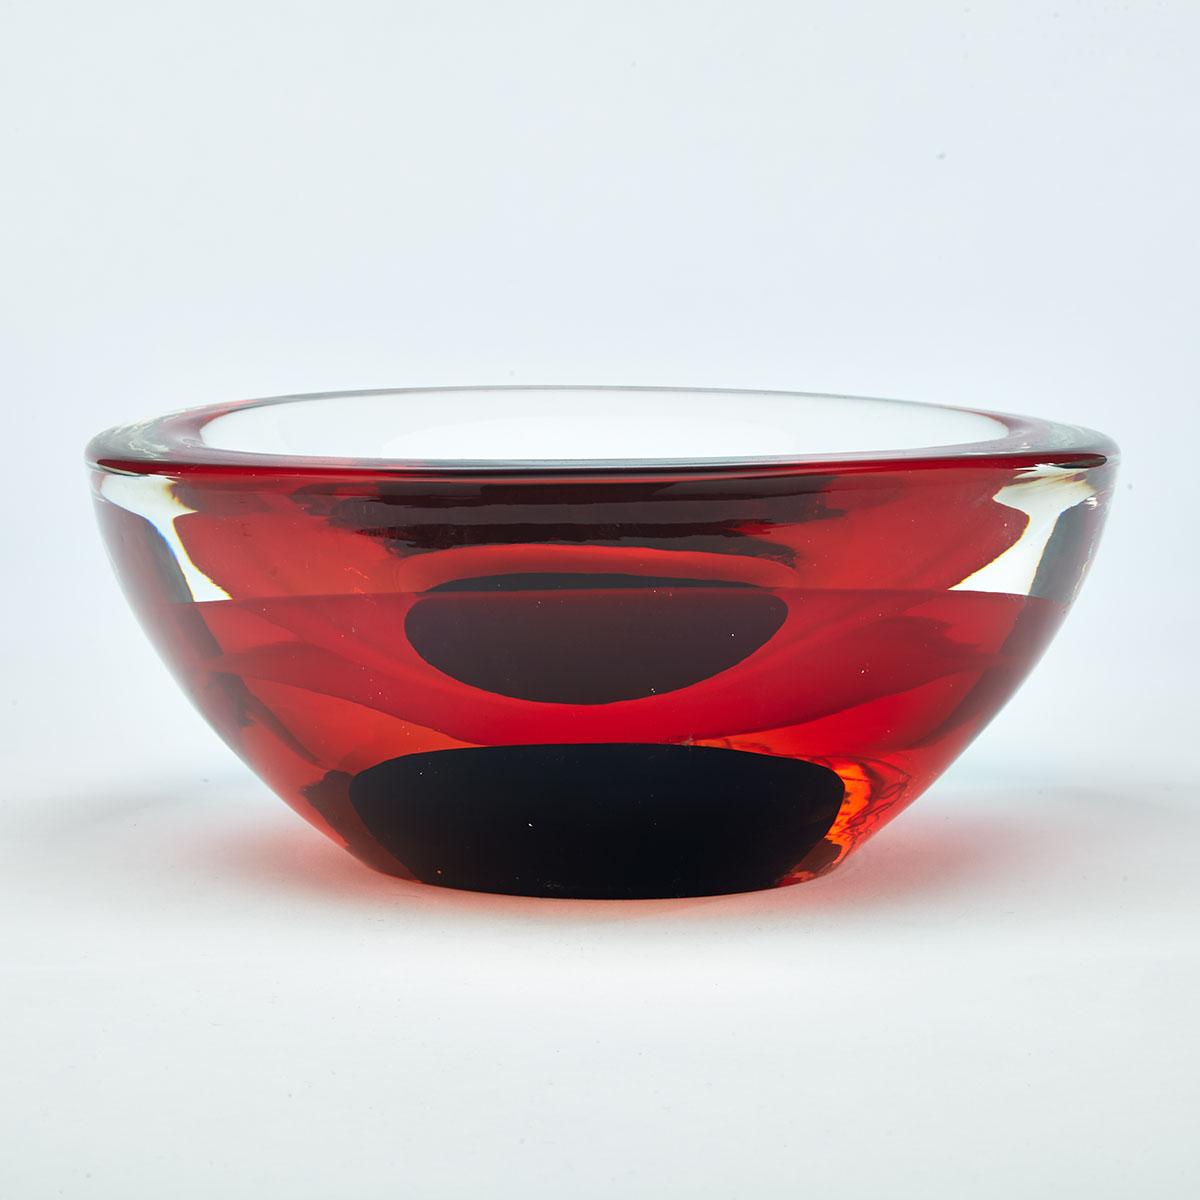 Luigi Onesto (Italian, b.1935) for Oggetti, Sommerso Glass Oval Bowl, c.2000